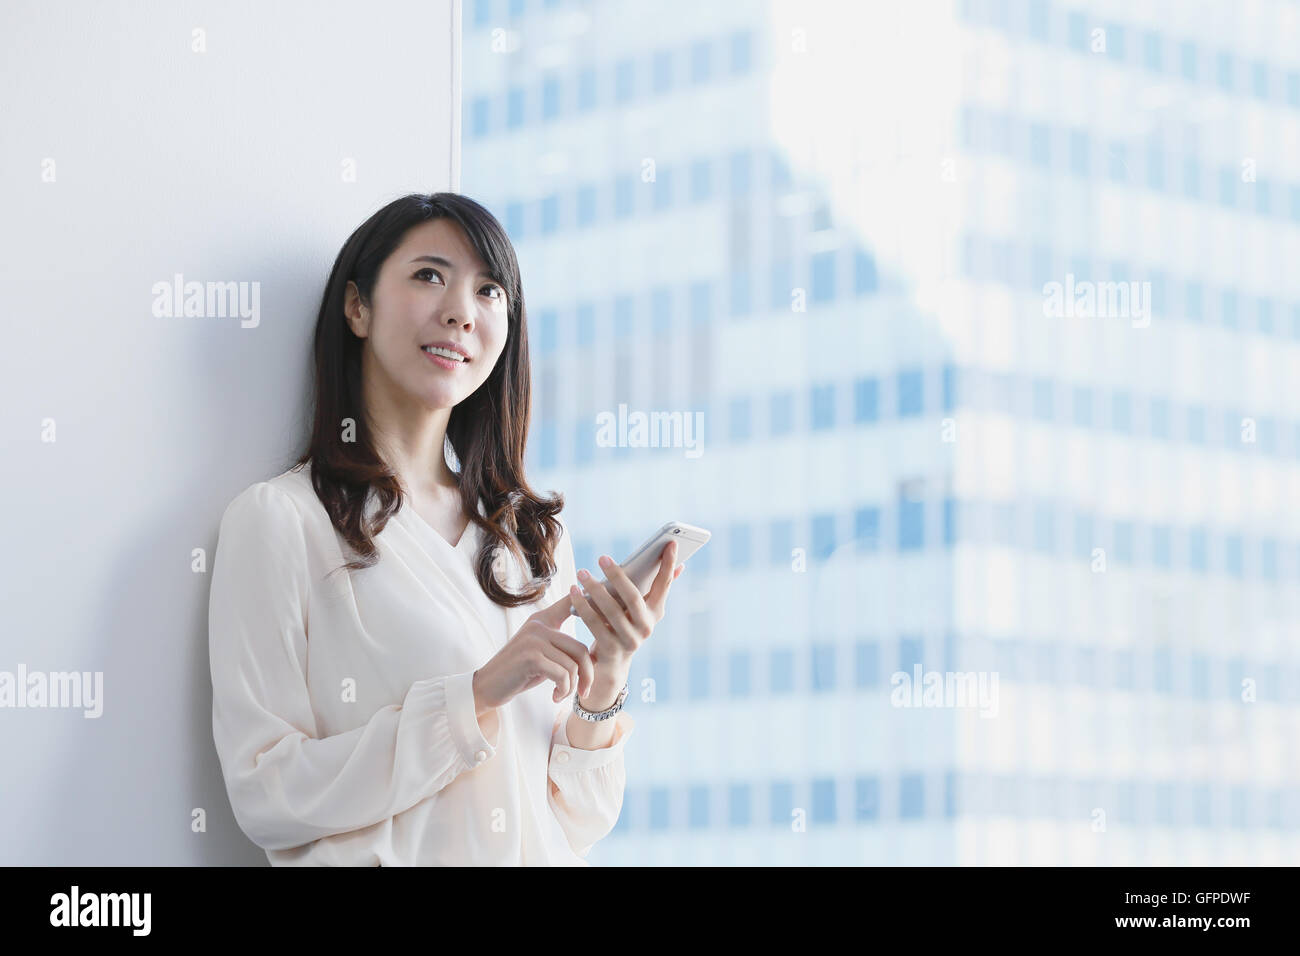 Japanese businesswoman Stock Photo